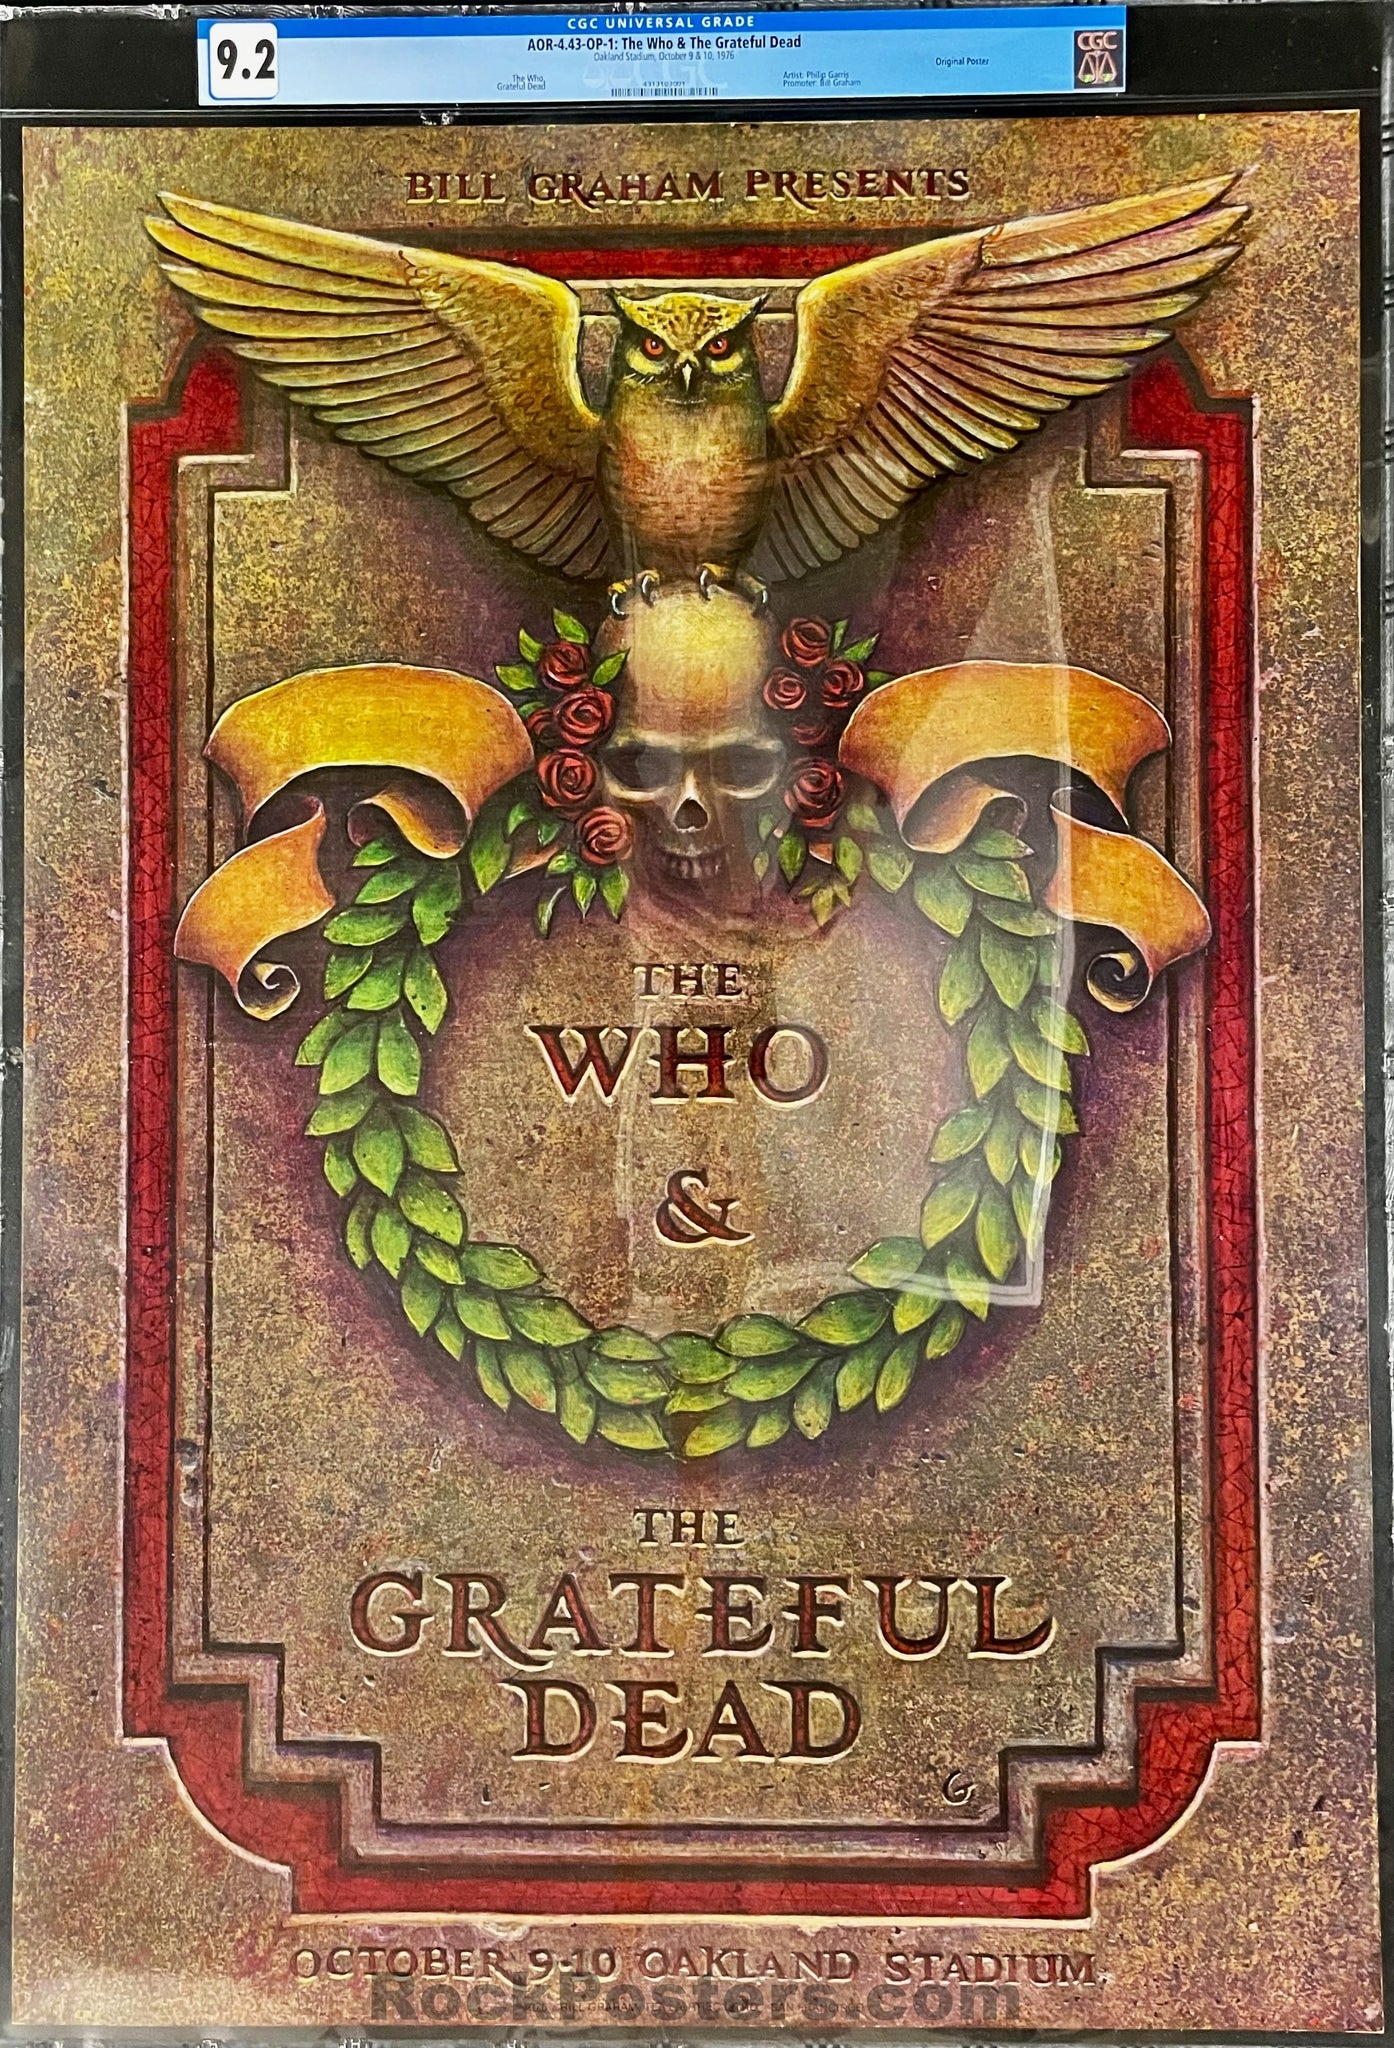 AOR 4.43 - The Who/Grateful Dead - 1976 Poster - Oakland Coliseum - CGC Graded 9.2